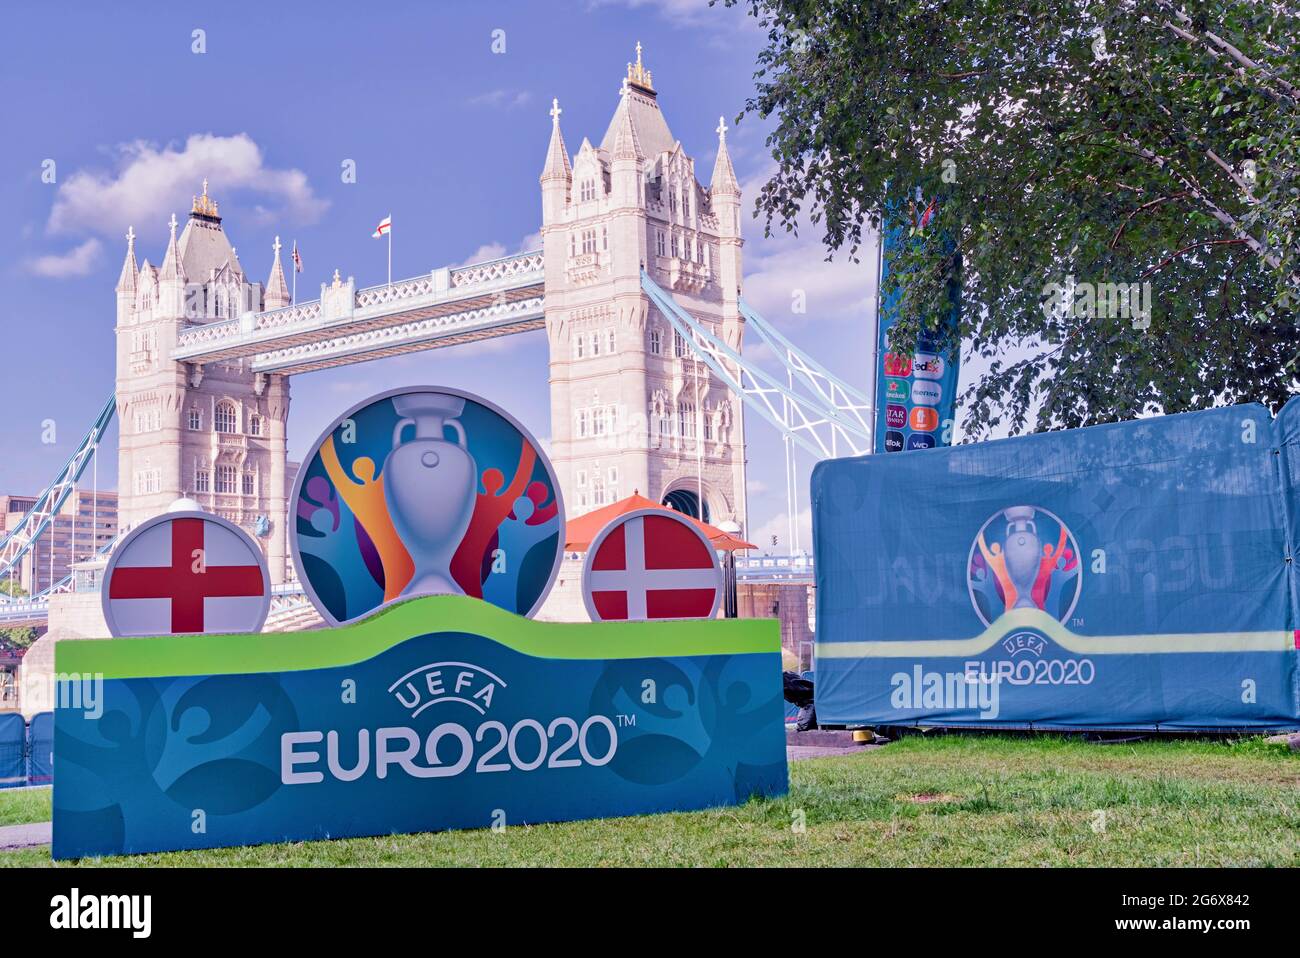 Euro 2020 logo displays in potter field park, London tower bridge, England, UK Stock Photo